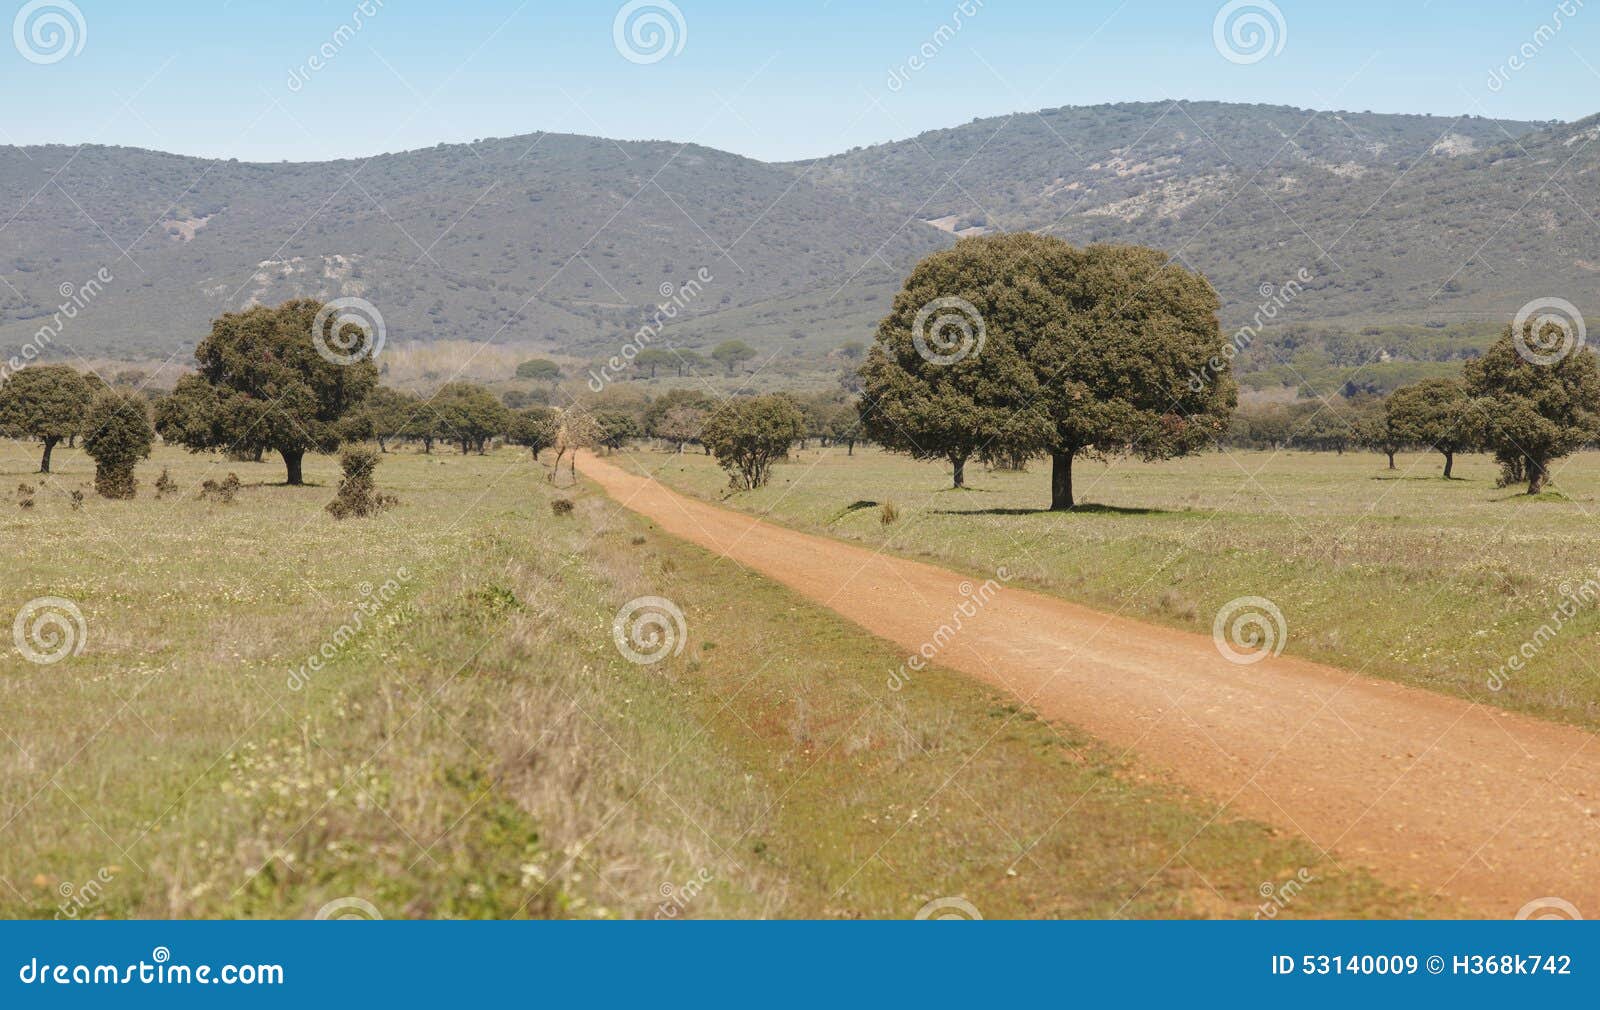 oak holms and gravel road in a mediterranean meadow. spain